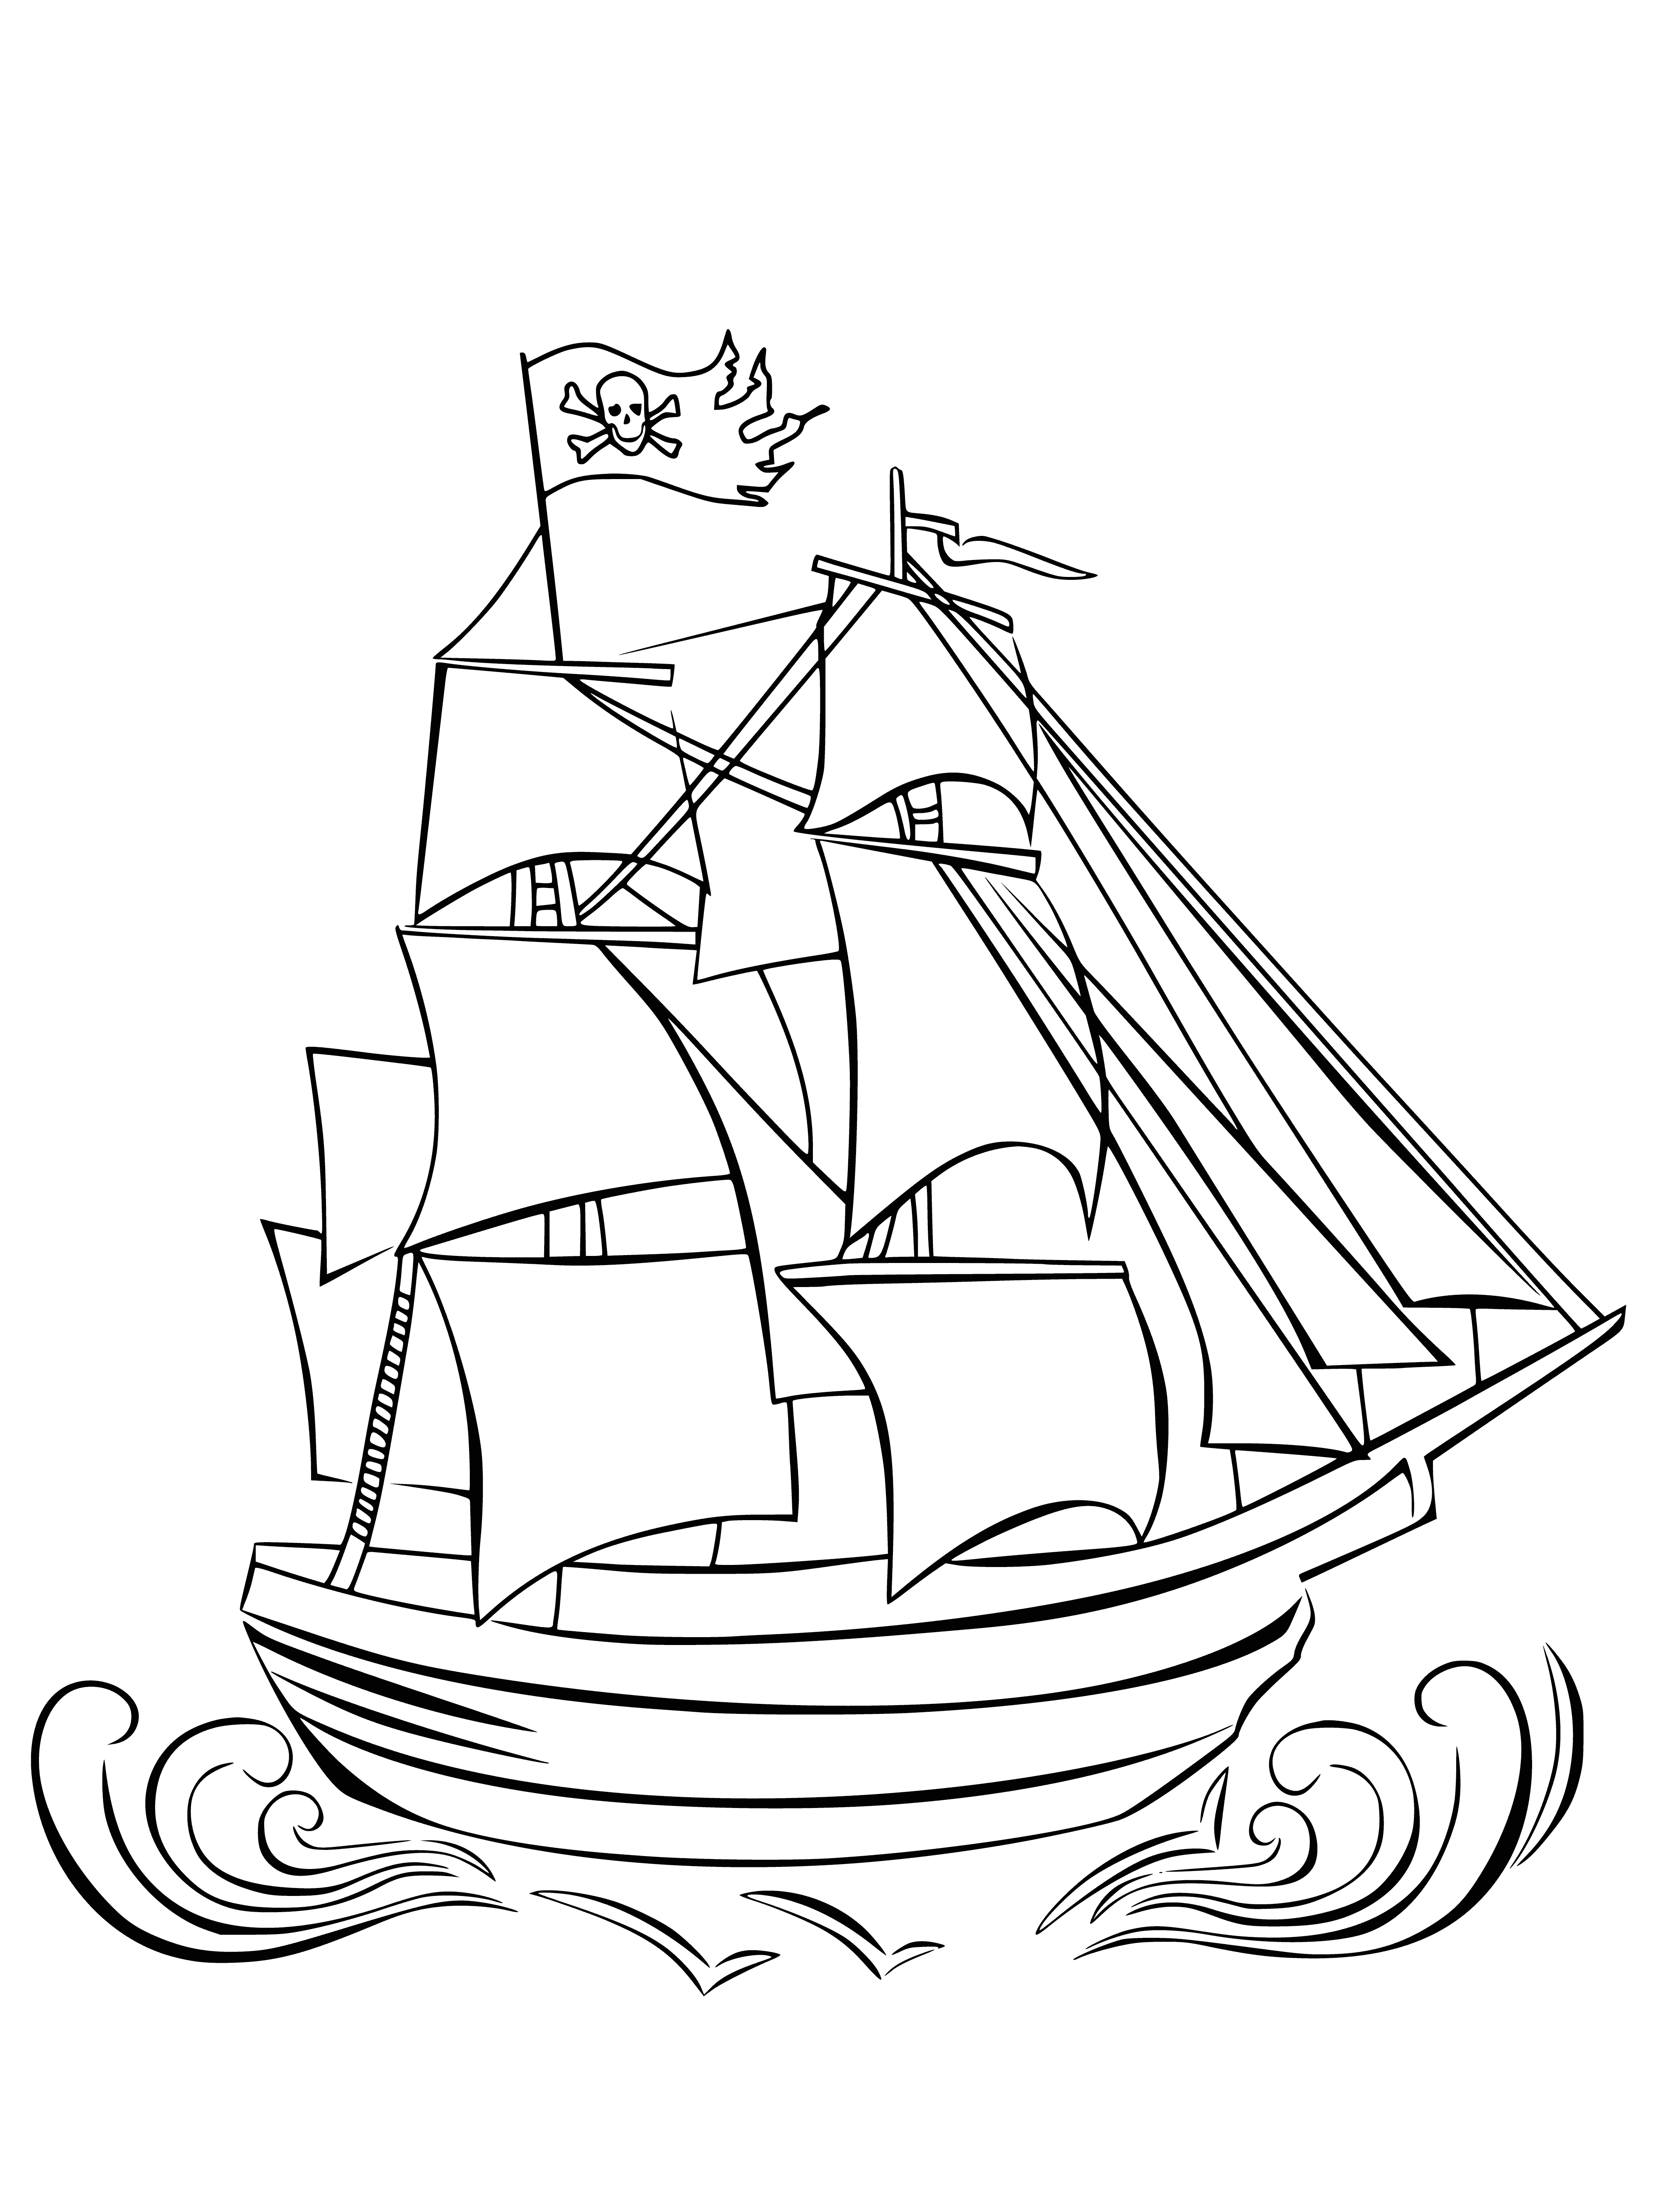 Ship under sail coloring page